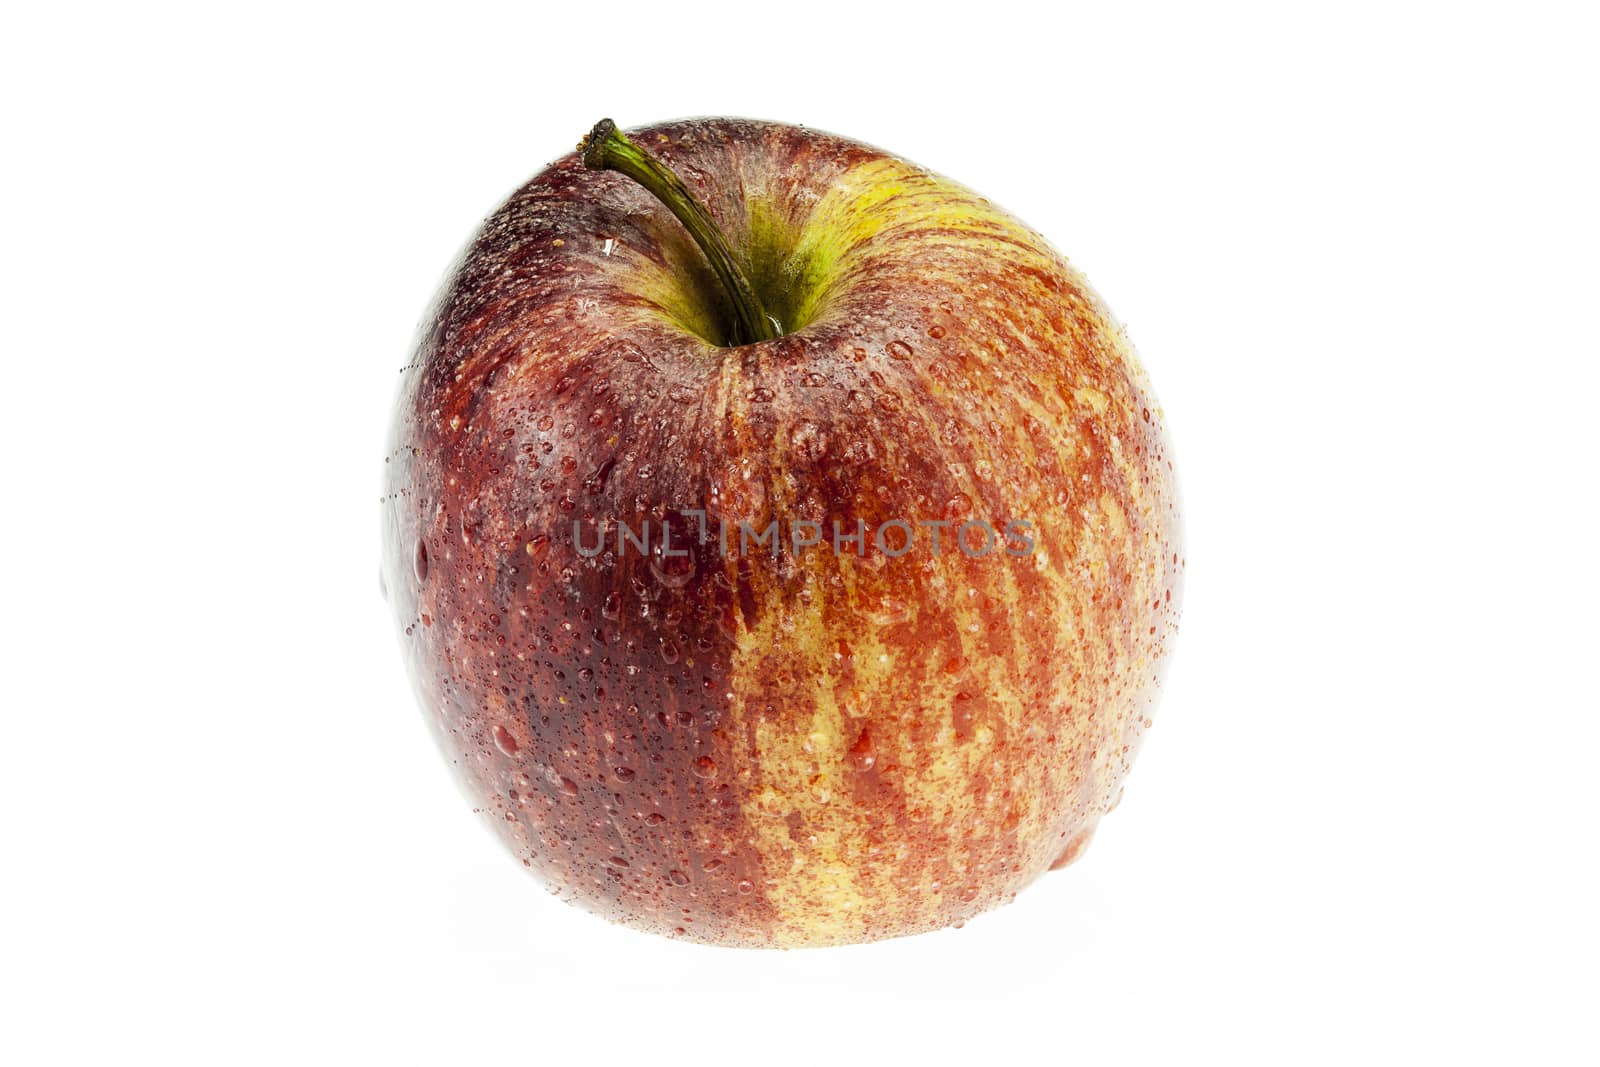 gala apple isolated on white background cutout